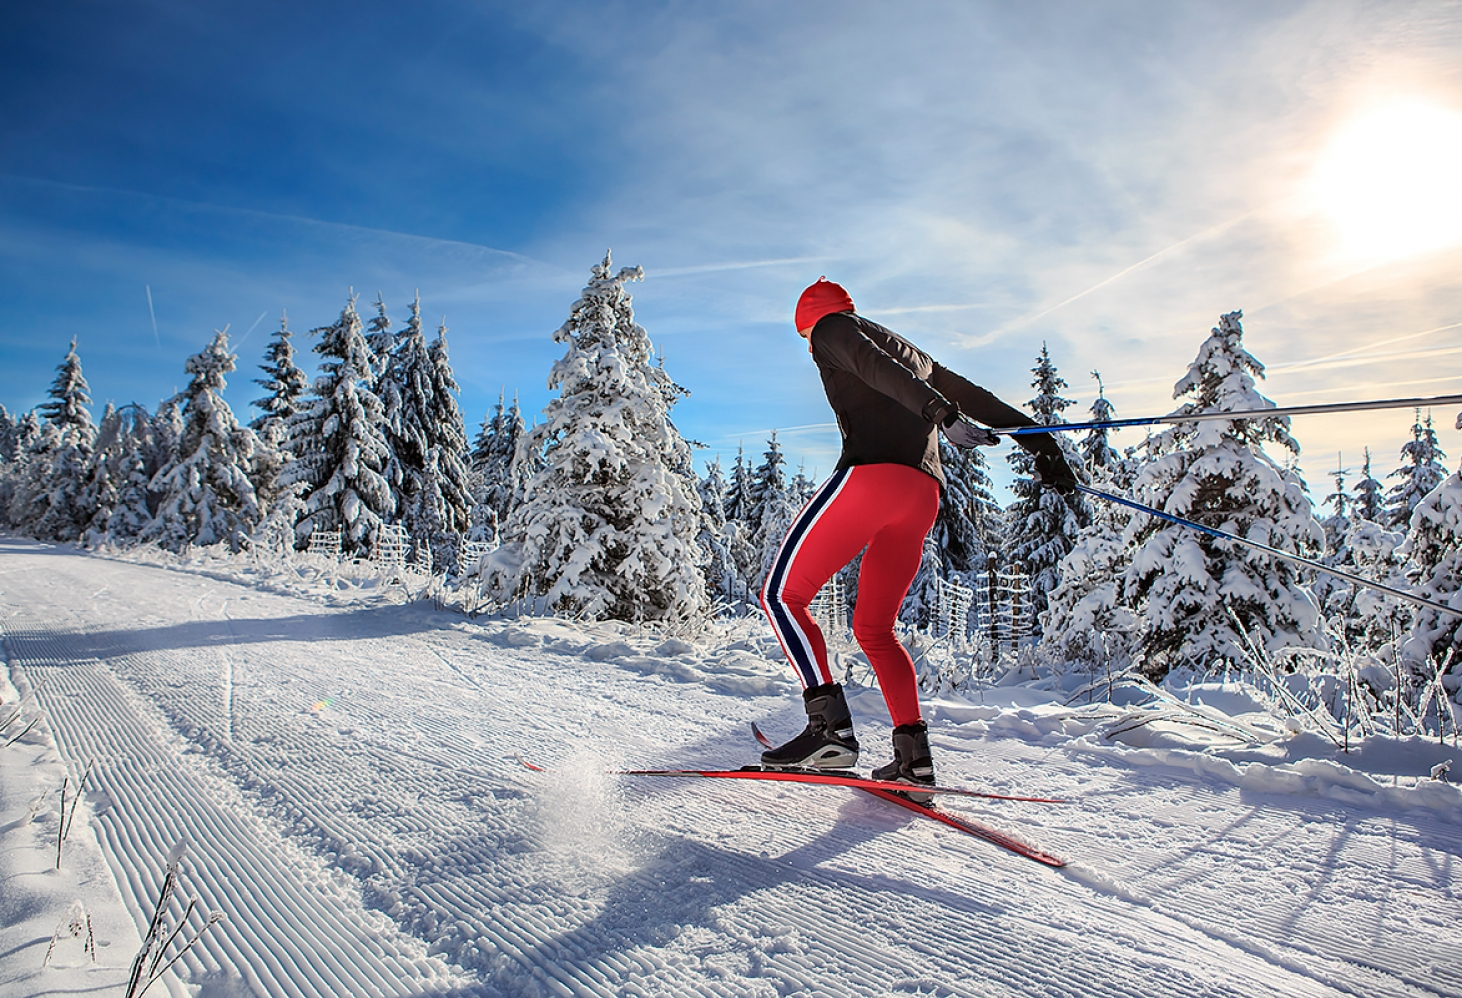 Лыжи Снег Зима - Бесплатное фото на Pixabay - Pixabay